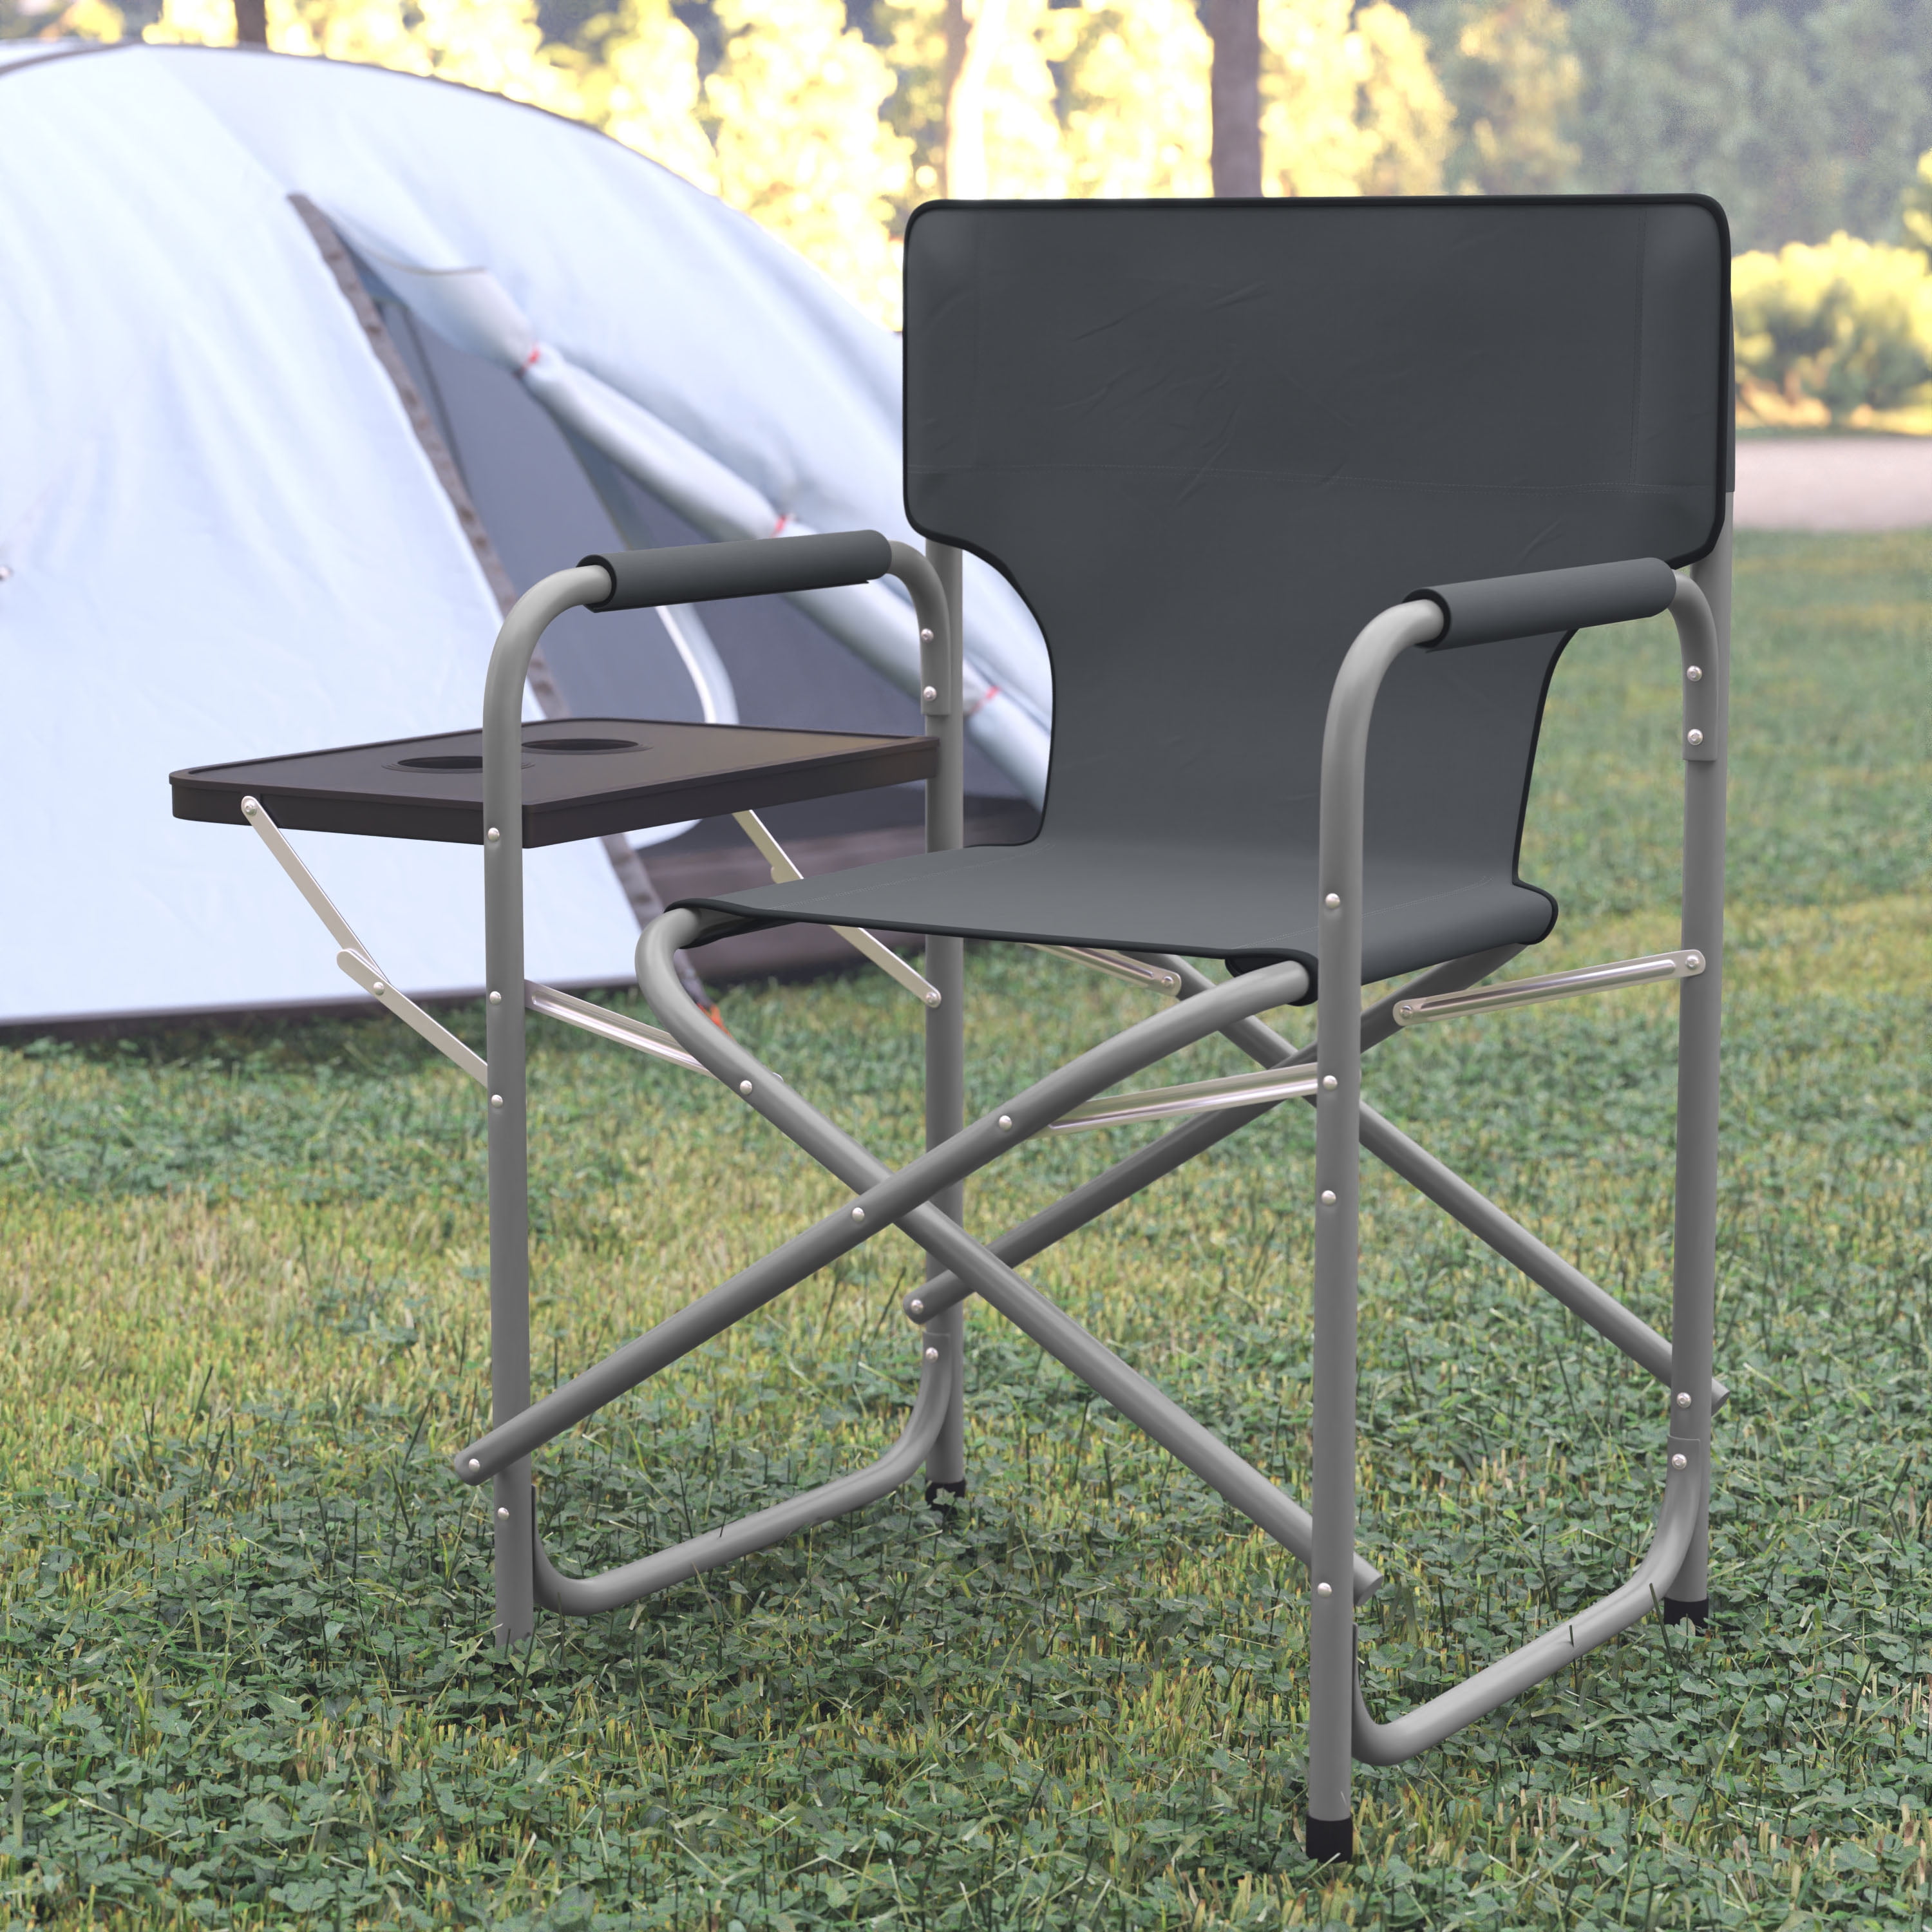 Timber Ridge Director Chair Folding Table Aluminum Camping Portable Lightweight 